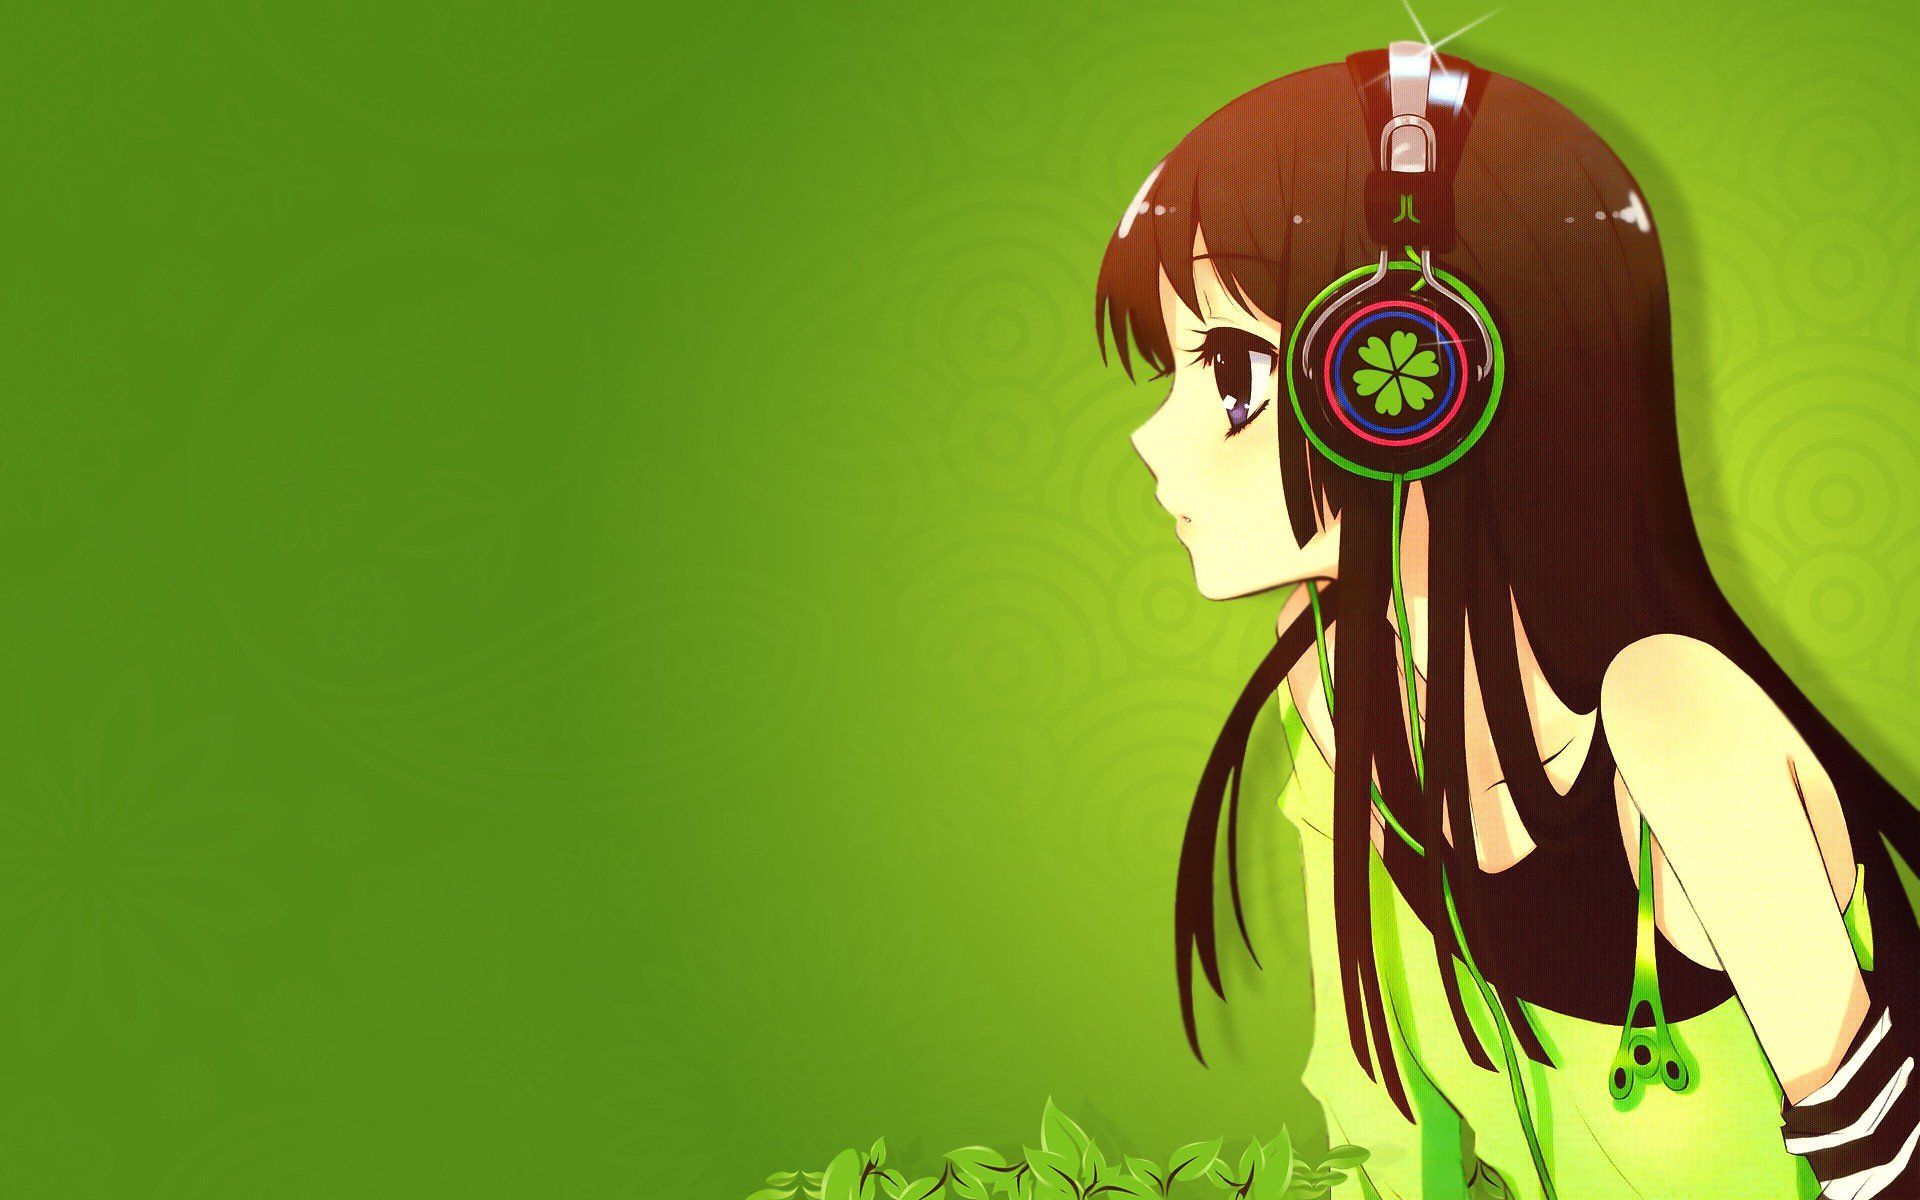 Neon Girl with Headphones Wallpaper FullHD by SirBSpeciaaL on DeviantArt